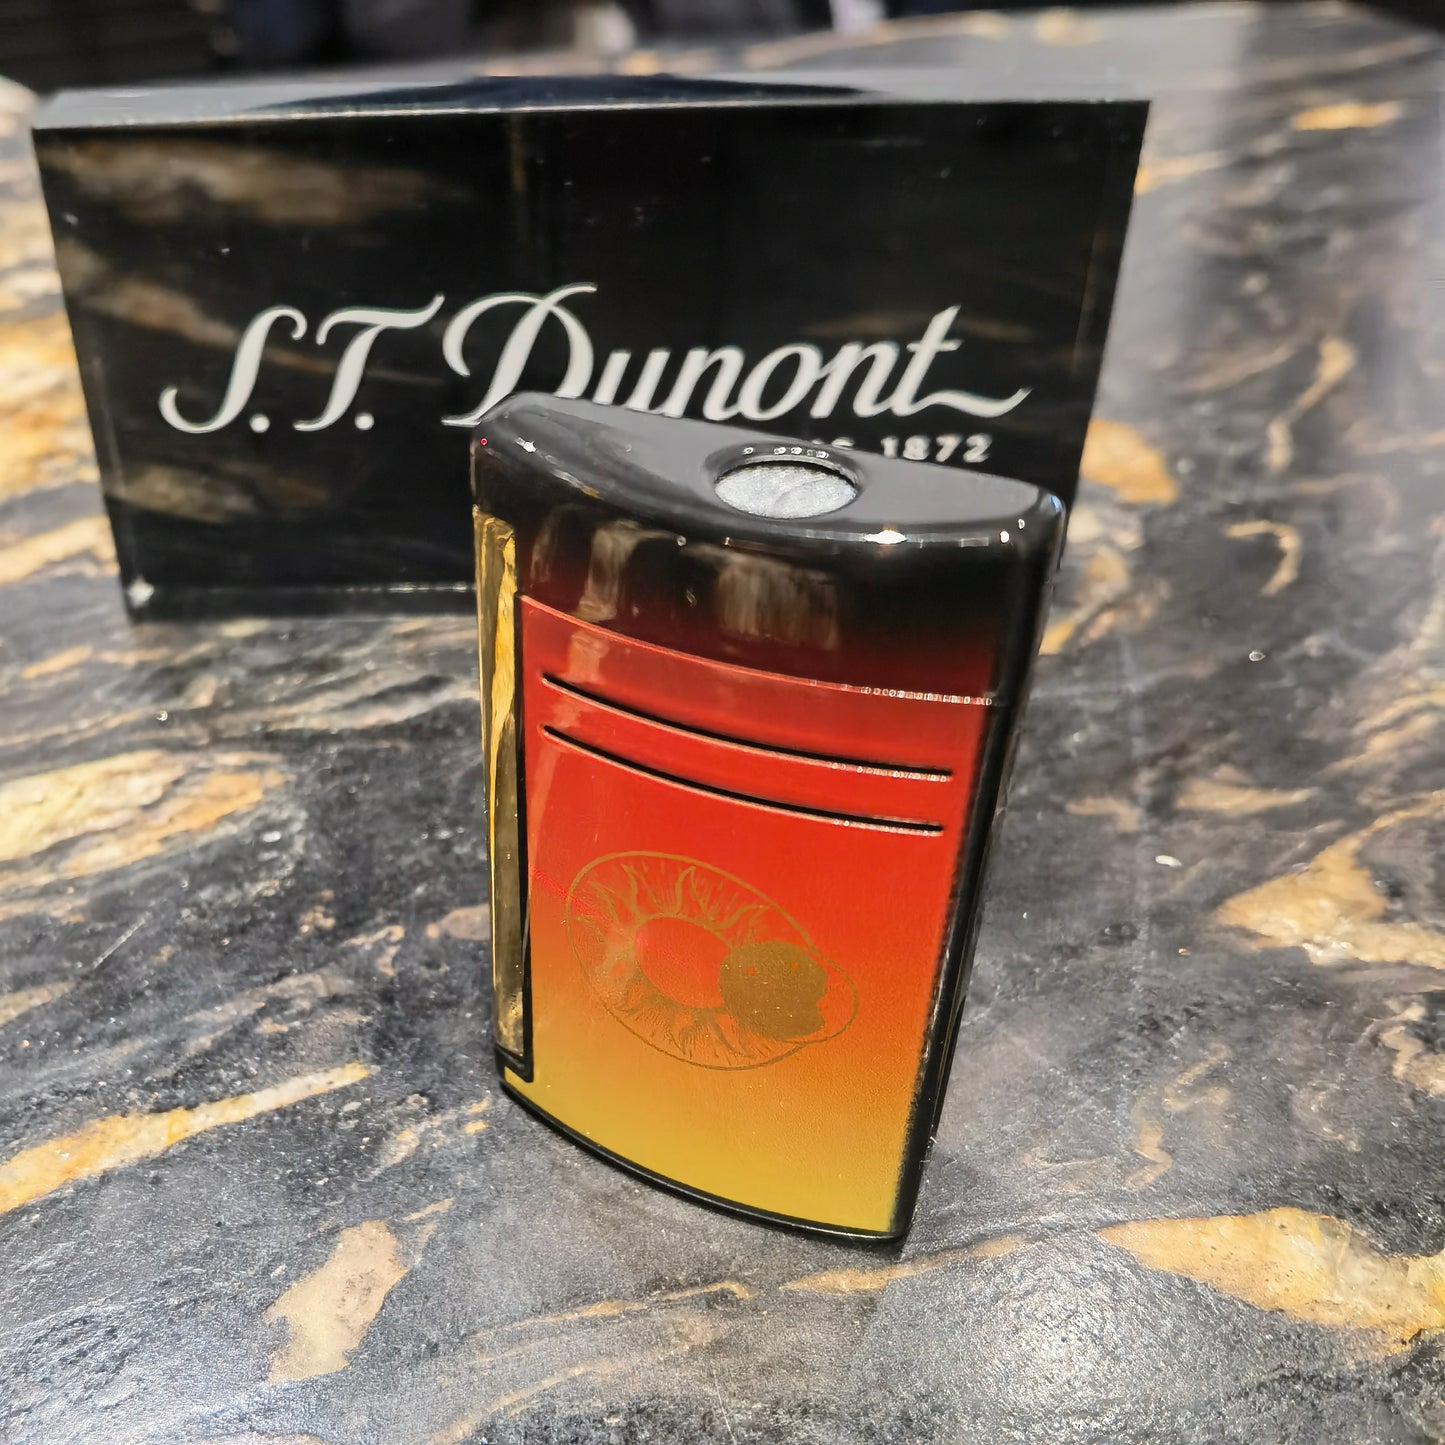 S.T. Dupont Maxijet Montecristo Le Crepuscule Limited Edition Cigar Lighter